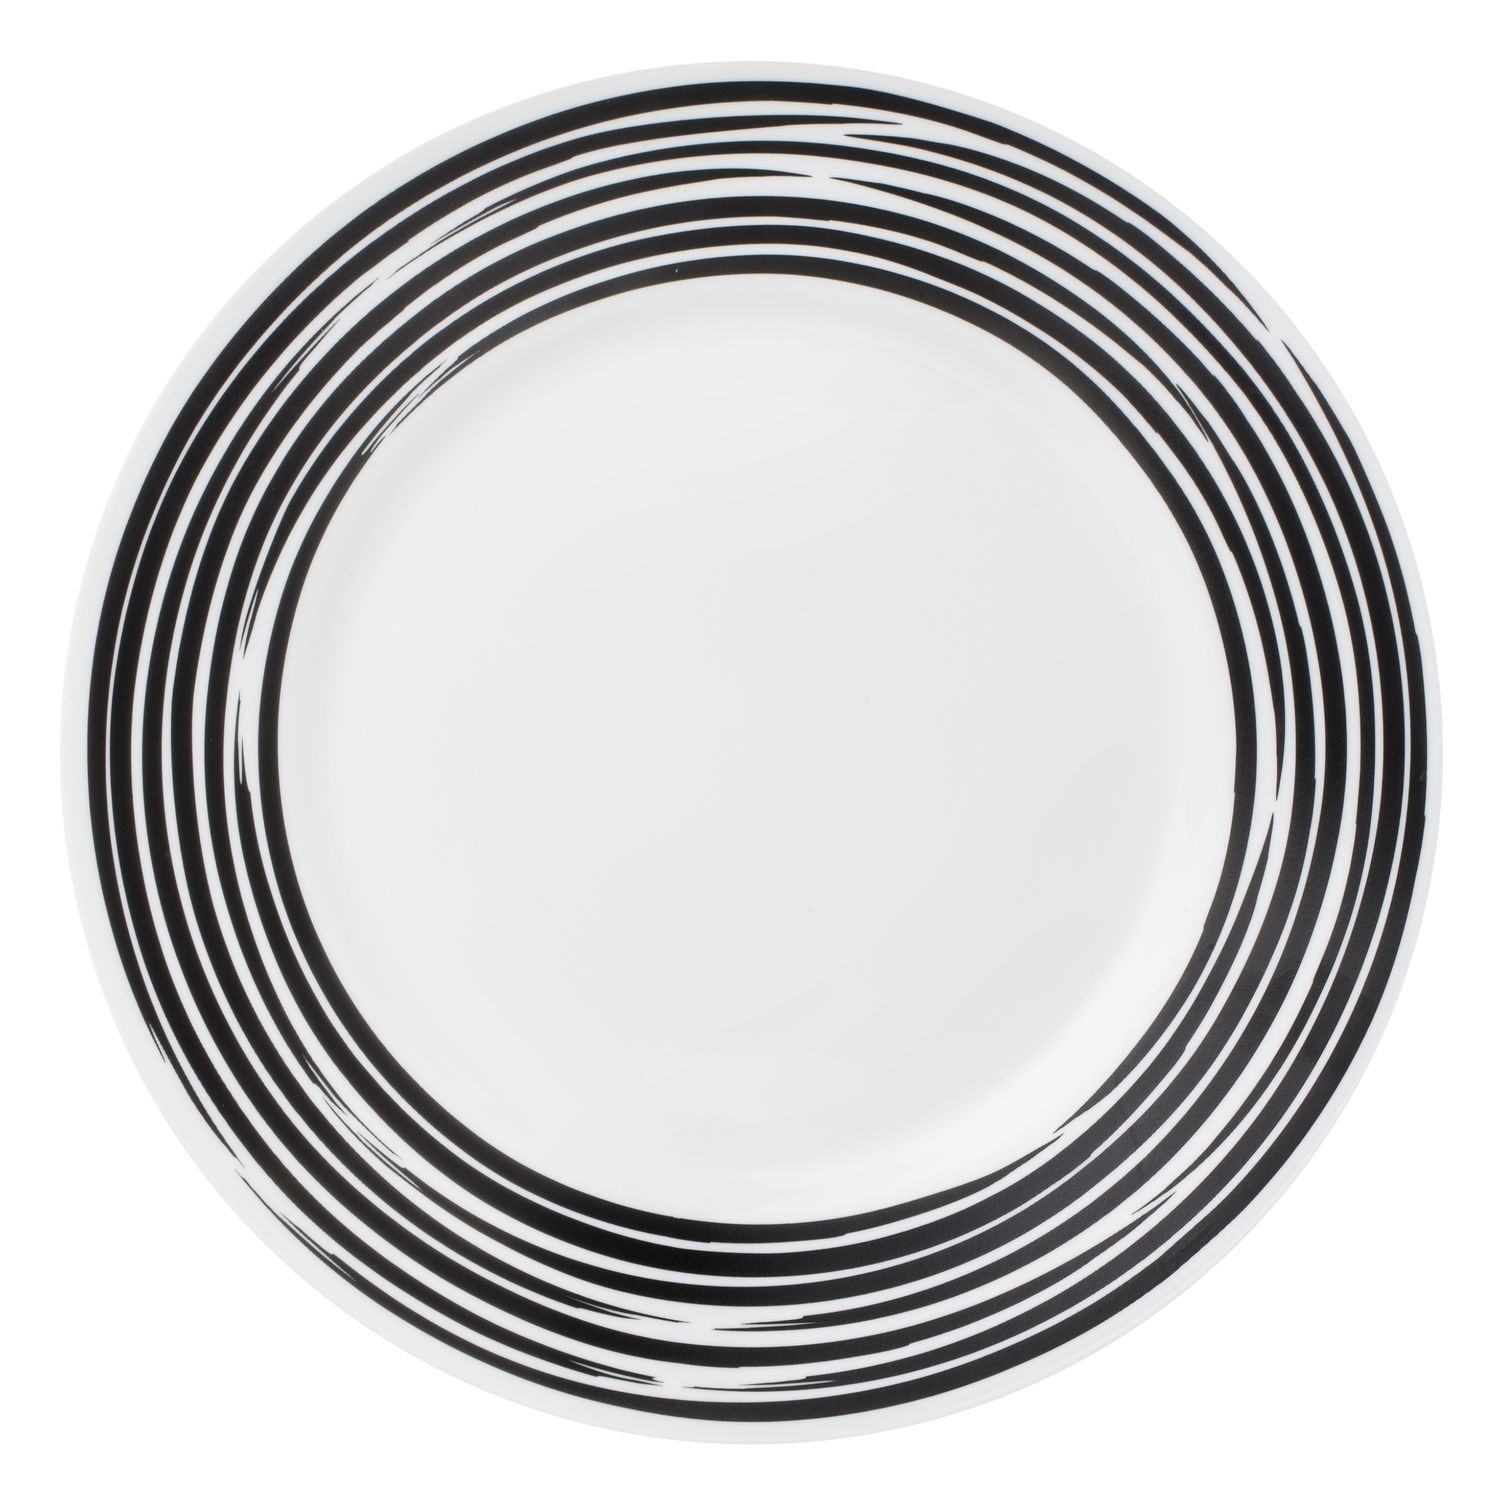 Тарелка обеденная 27 см Corelle Brushed Black тарелка обеденная 27 см corelle brushed black